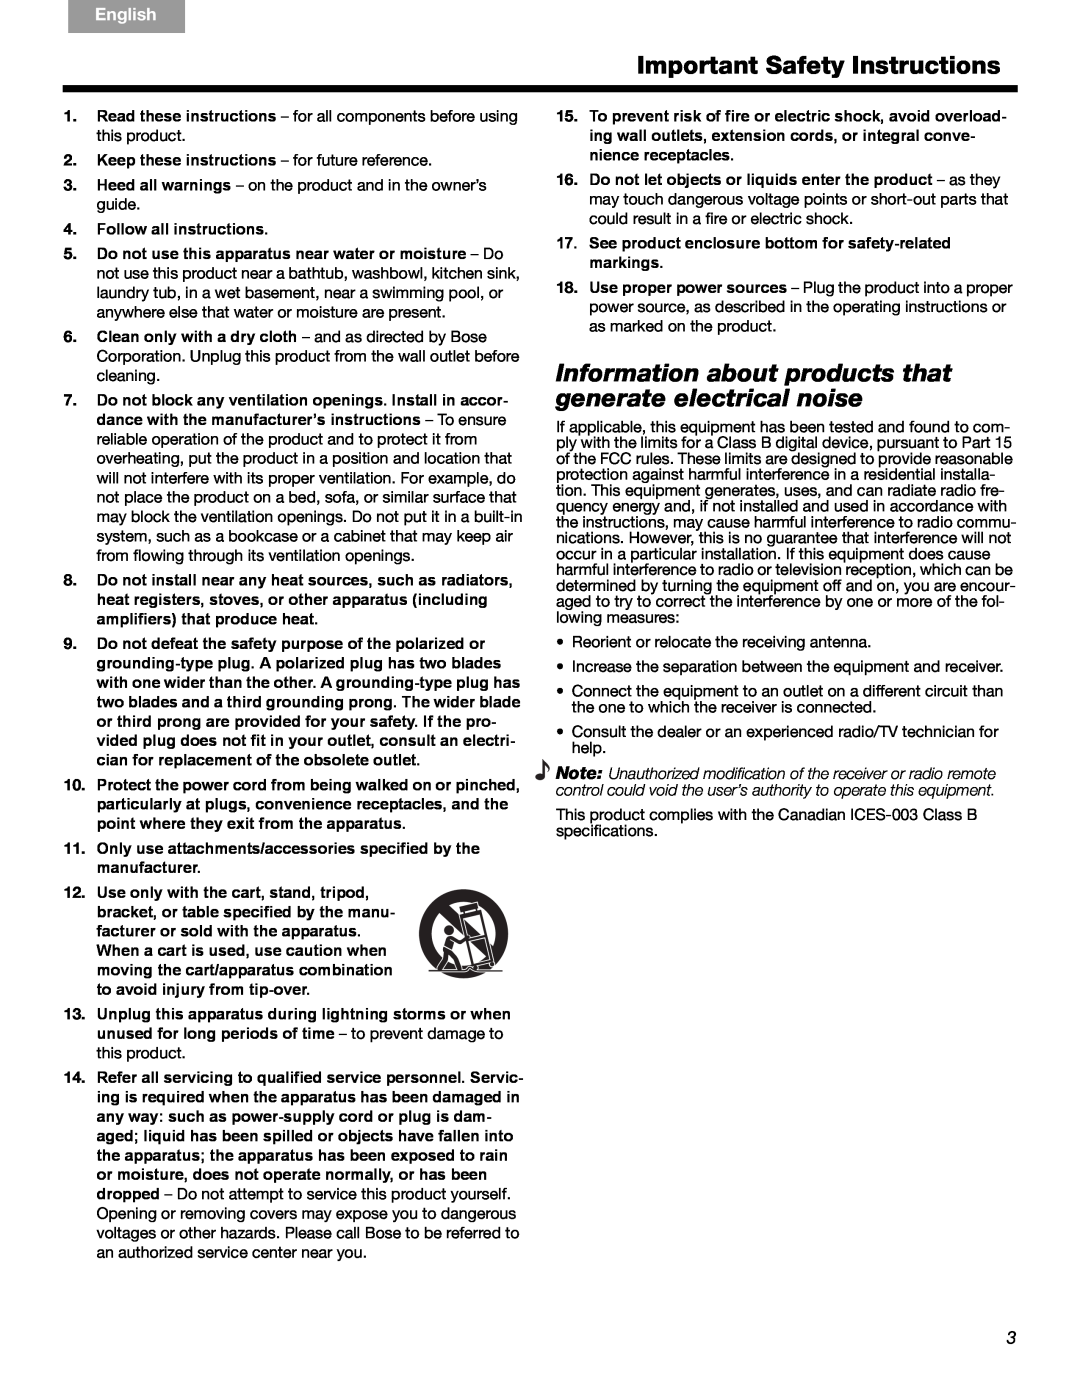 Bose 3 manual Important Safety Instructions, Español Français, English 